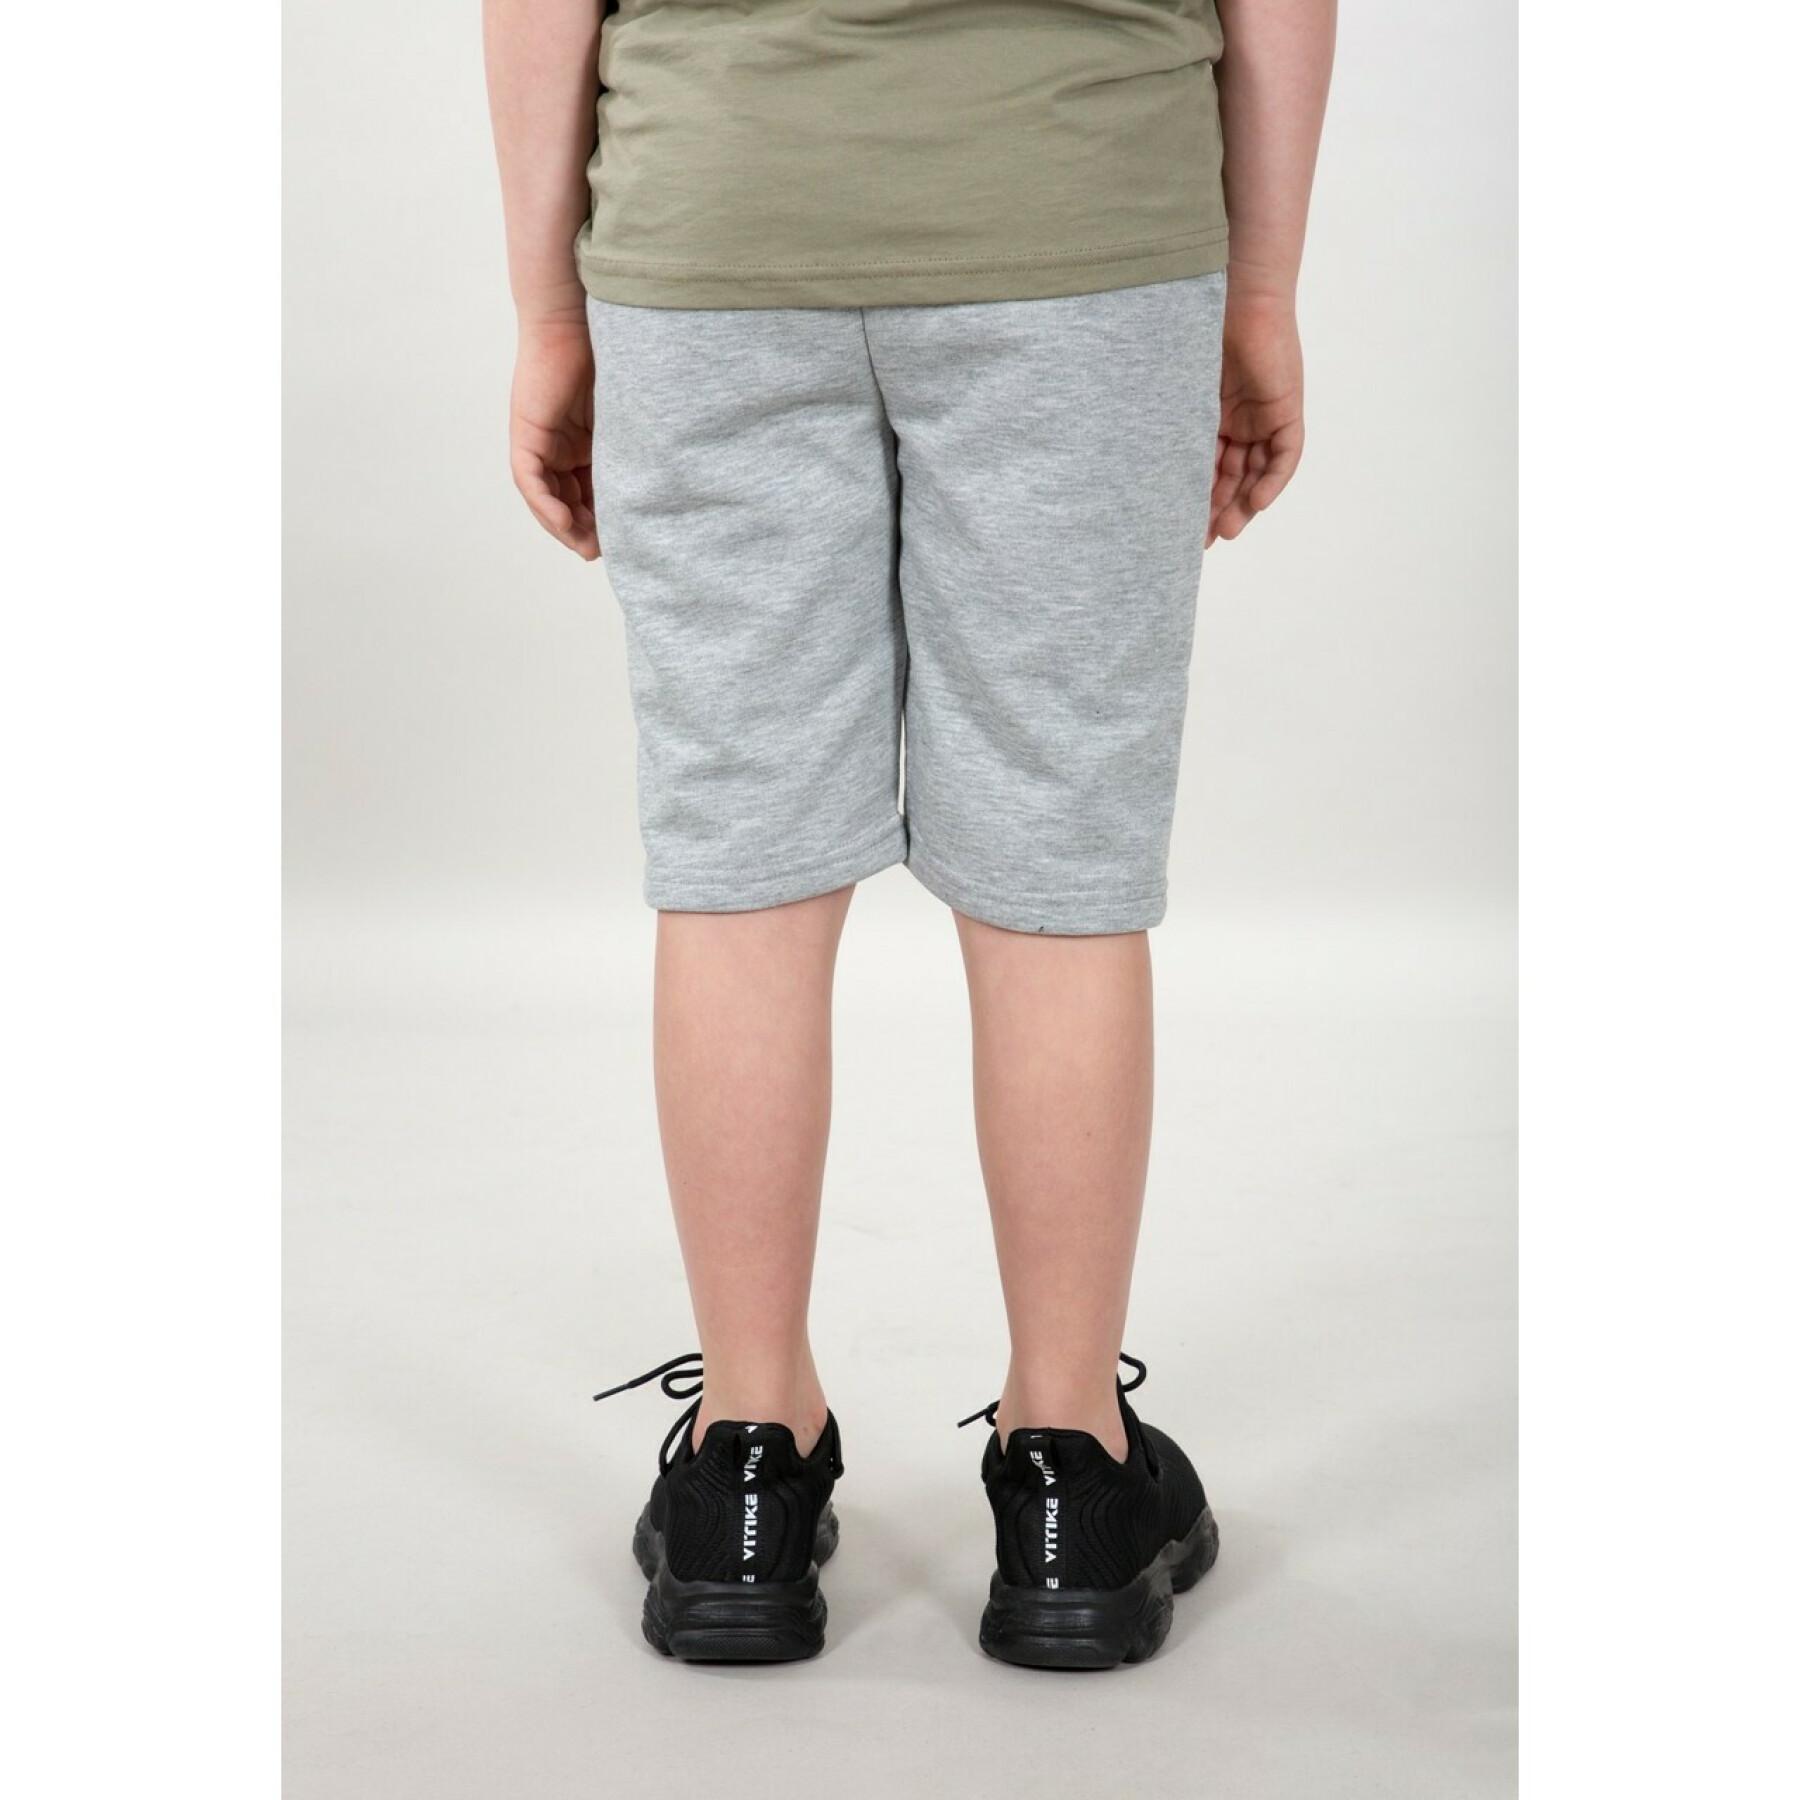 Pantaloncini per bambini Alpha Industries Basic Jogger SL